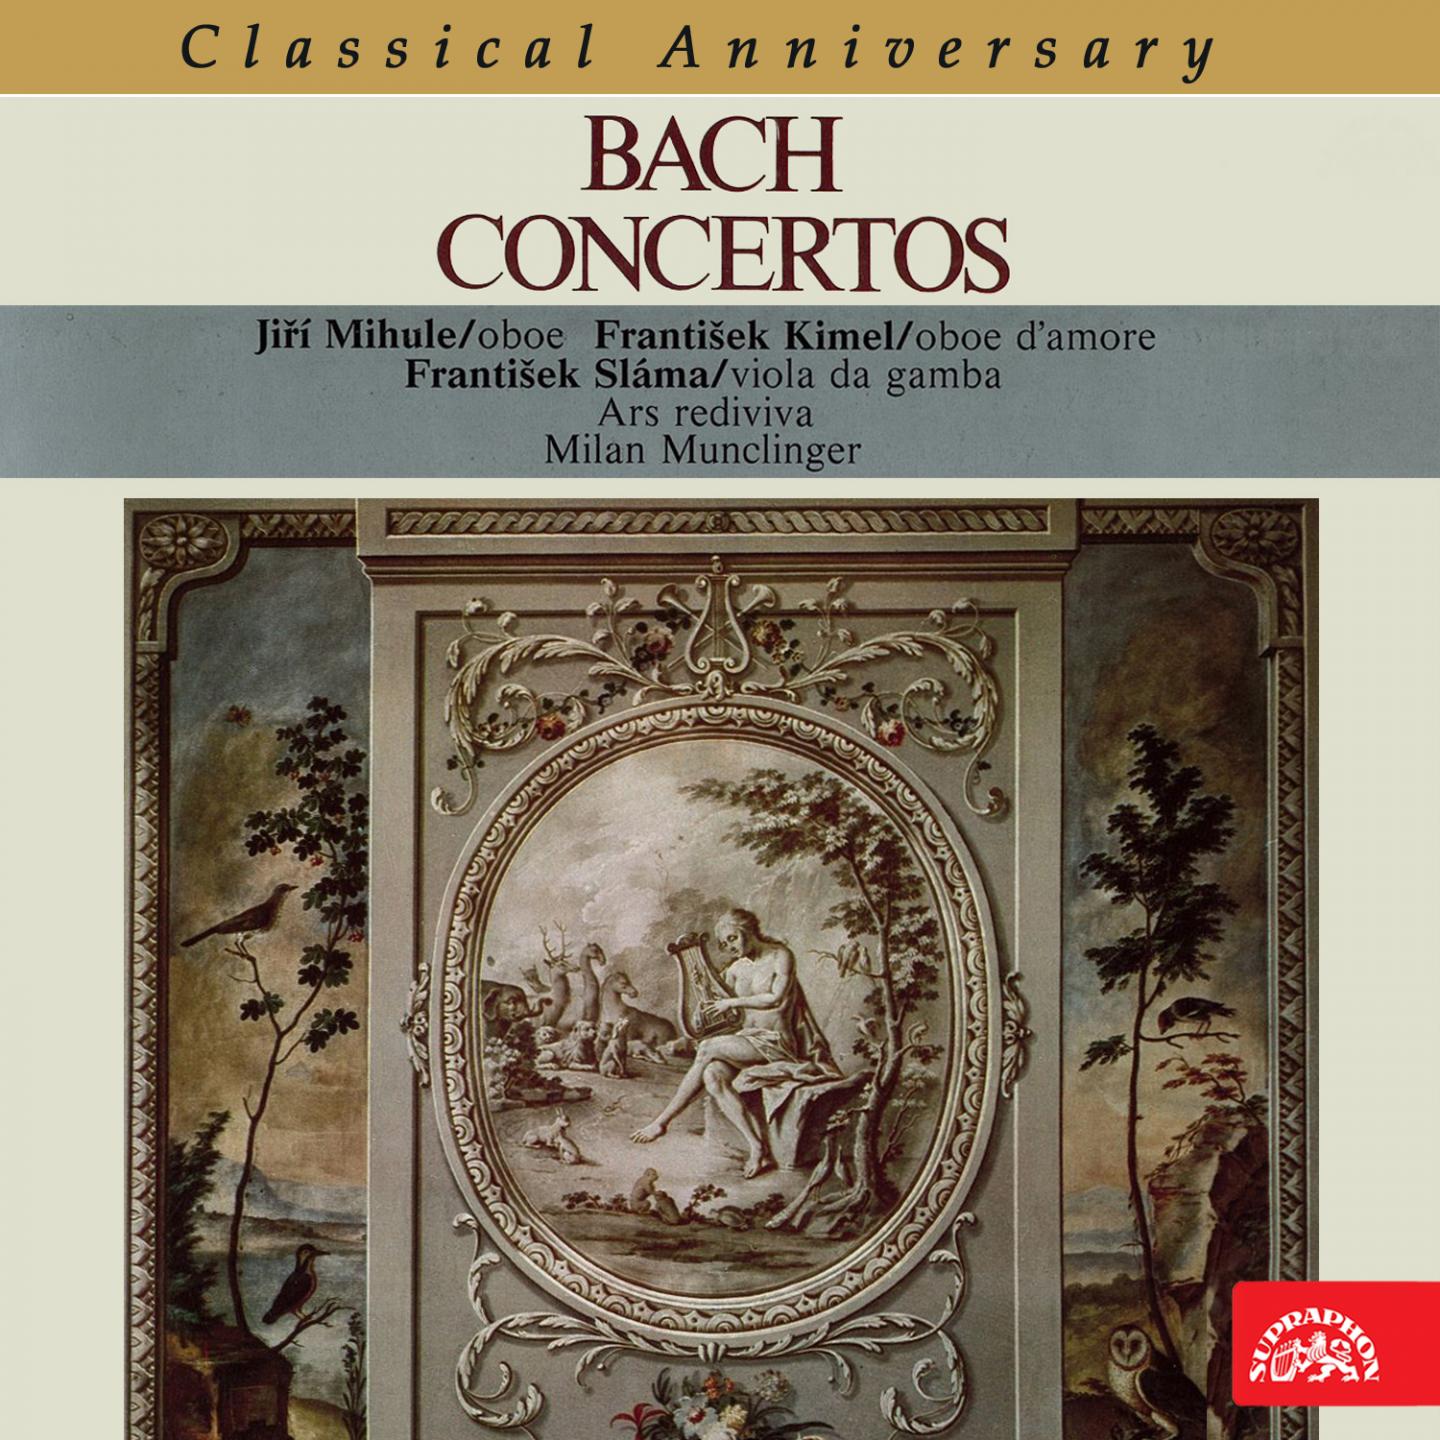 Oboe Concerto in D Minor, BWV 1059R: III. Presto